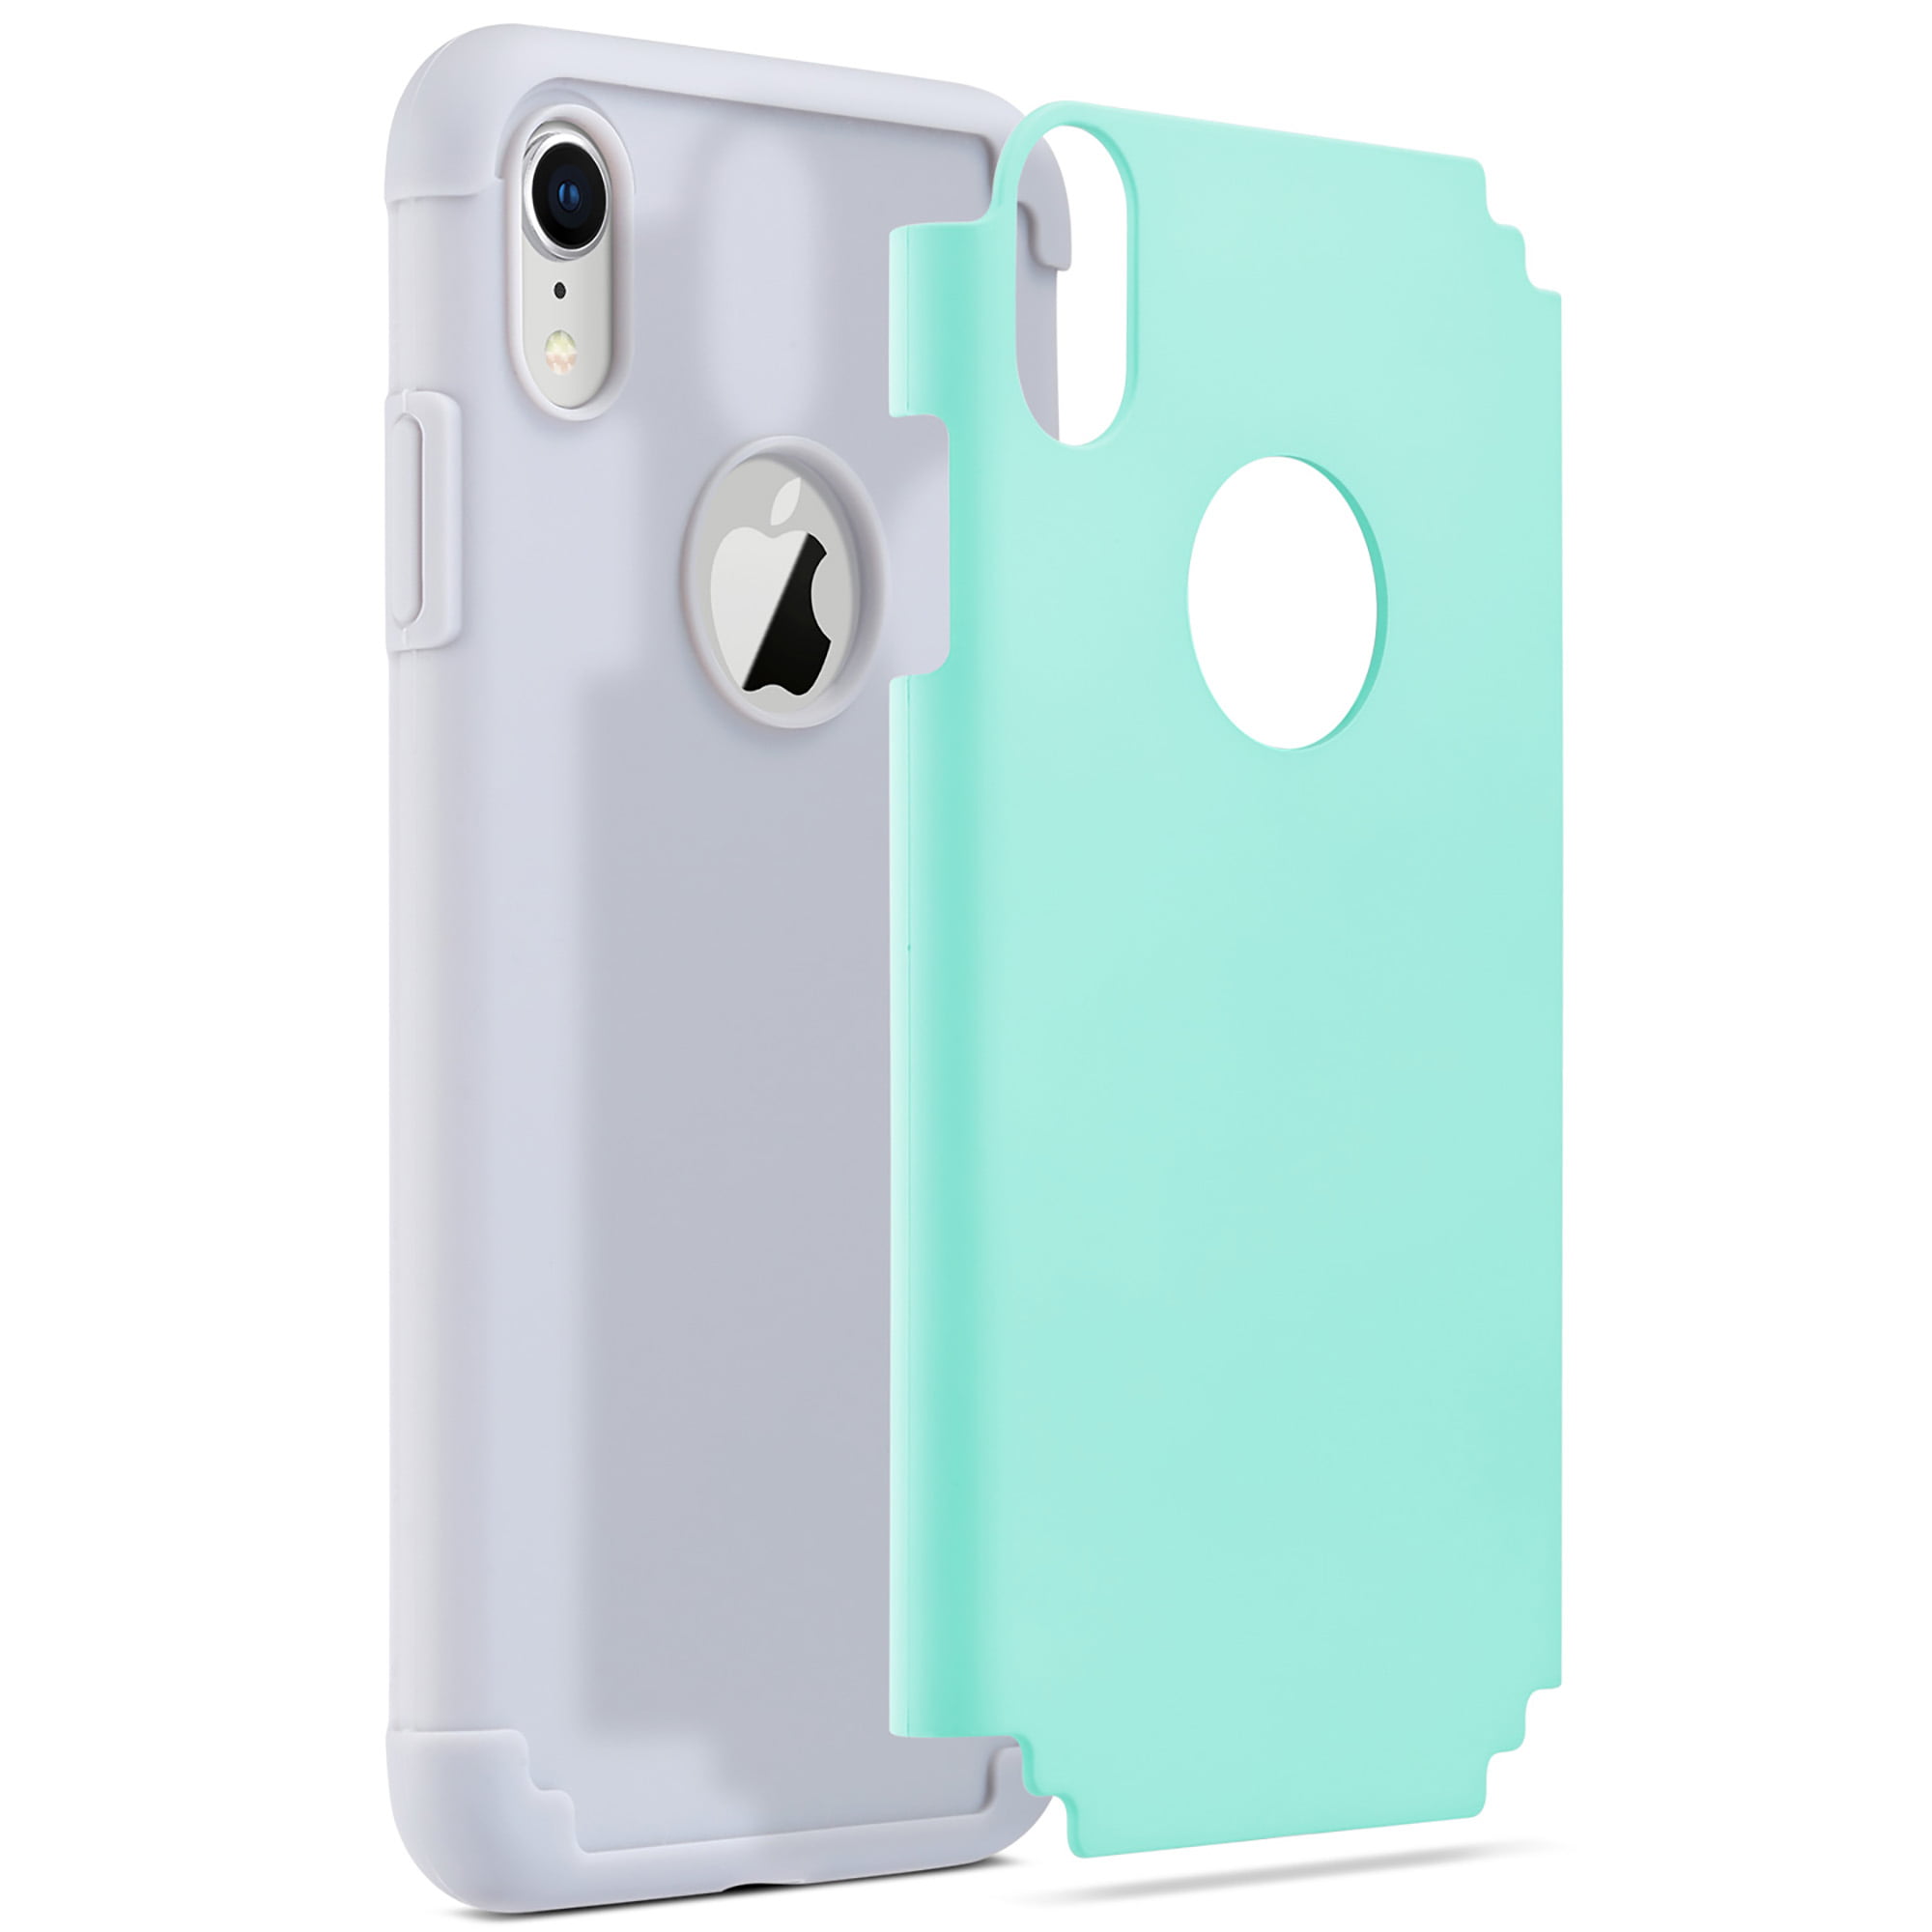 Supreme 018 iPhone XR  Iphone, Cute phone cases, İphone xr